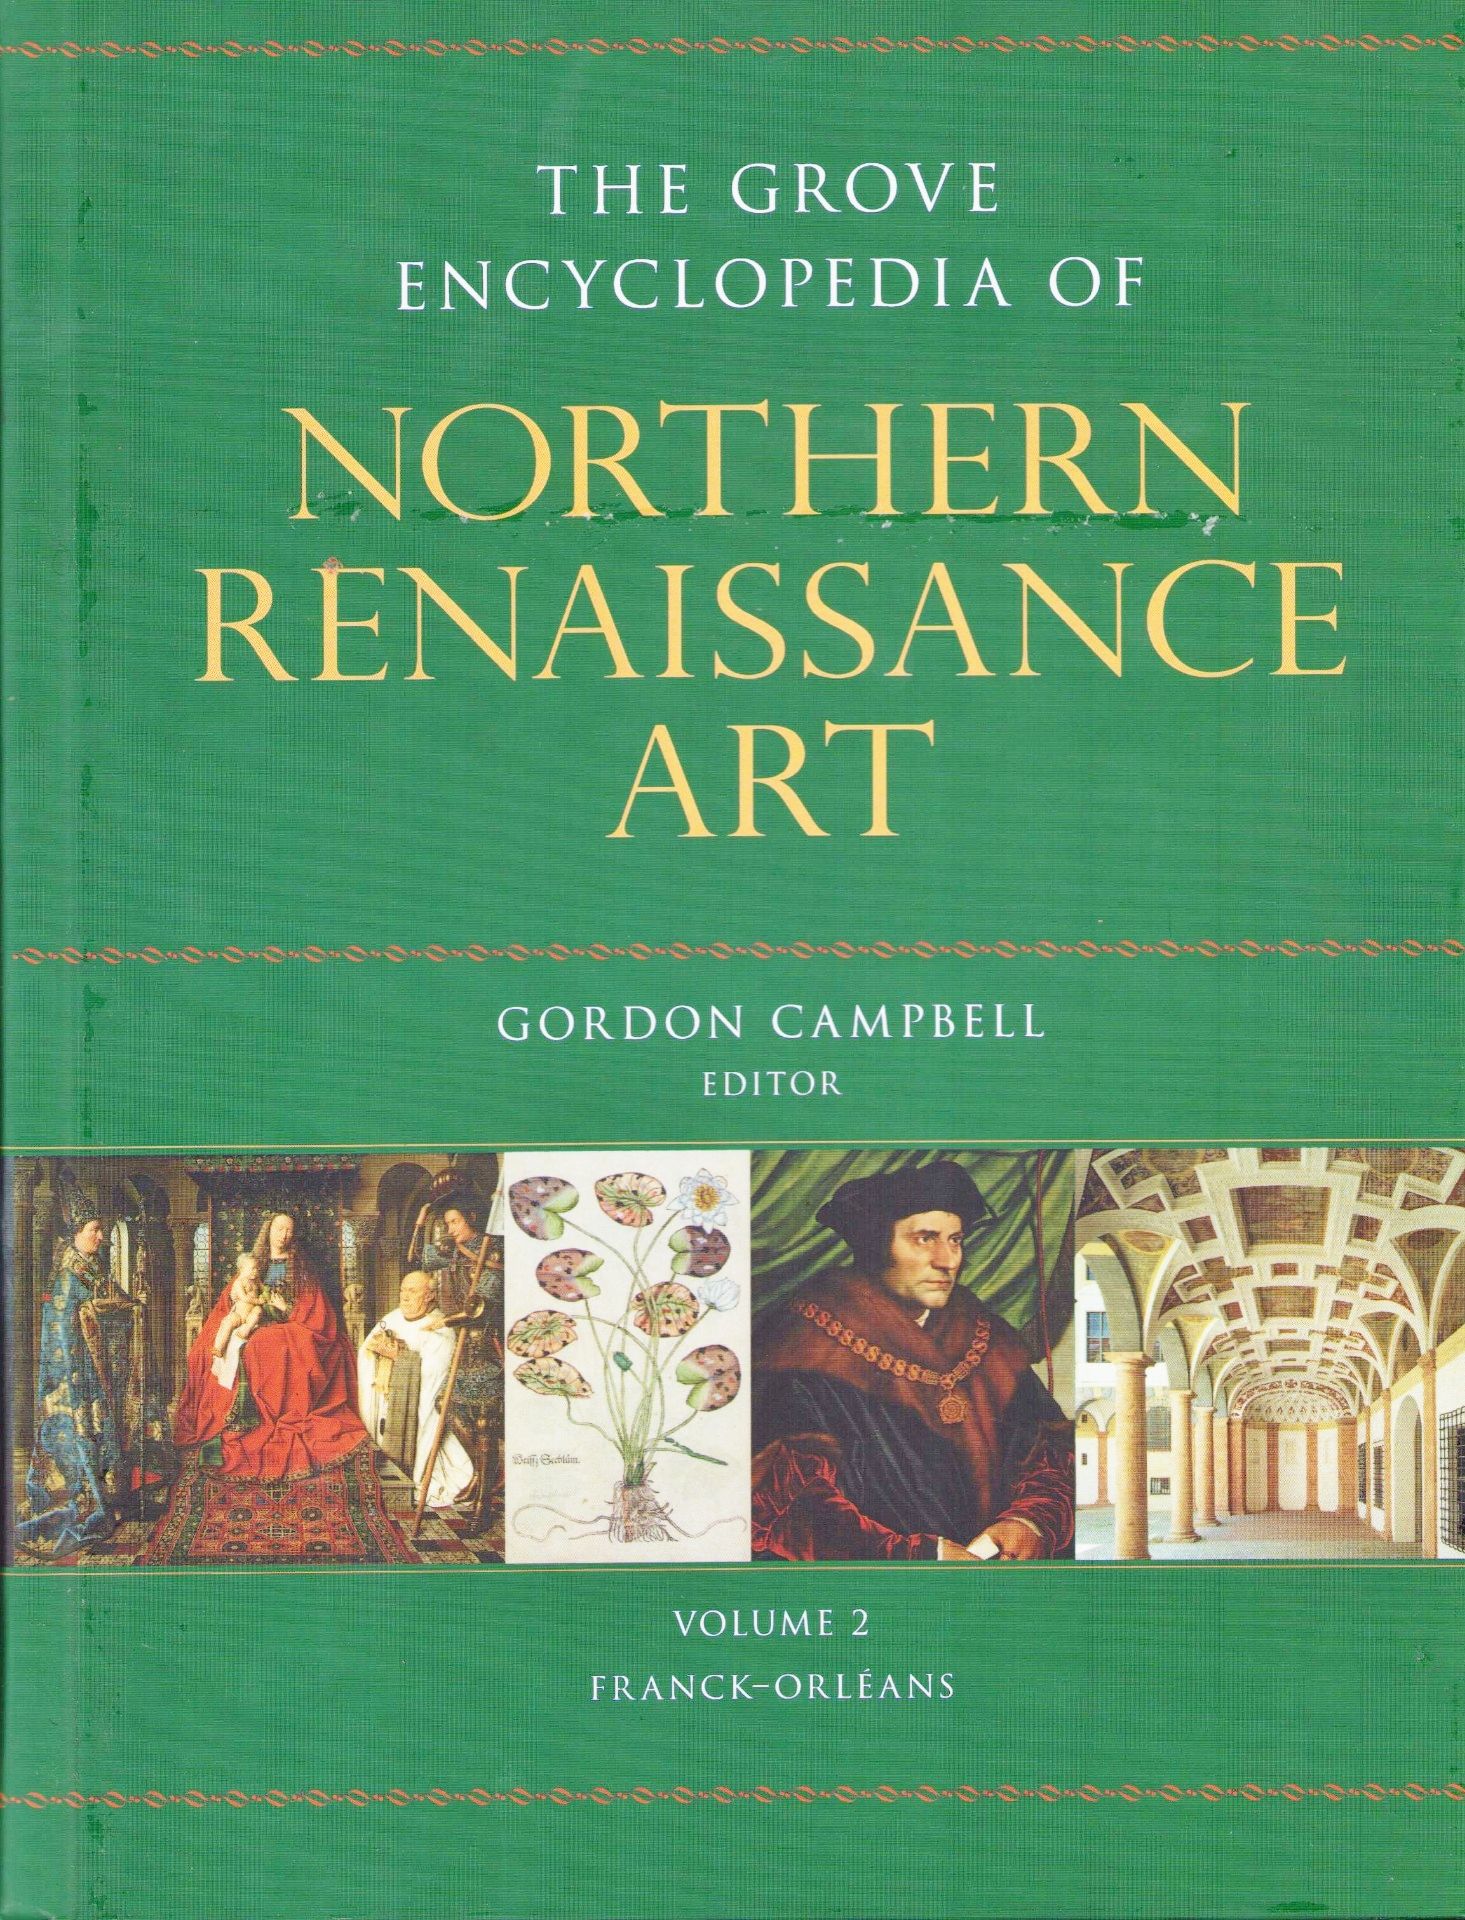 |Art| Campbell Gordon, "The Grove Encyclopedia of Northern Renaissance Art", 2009